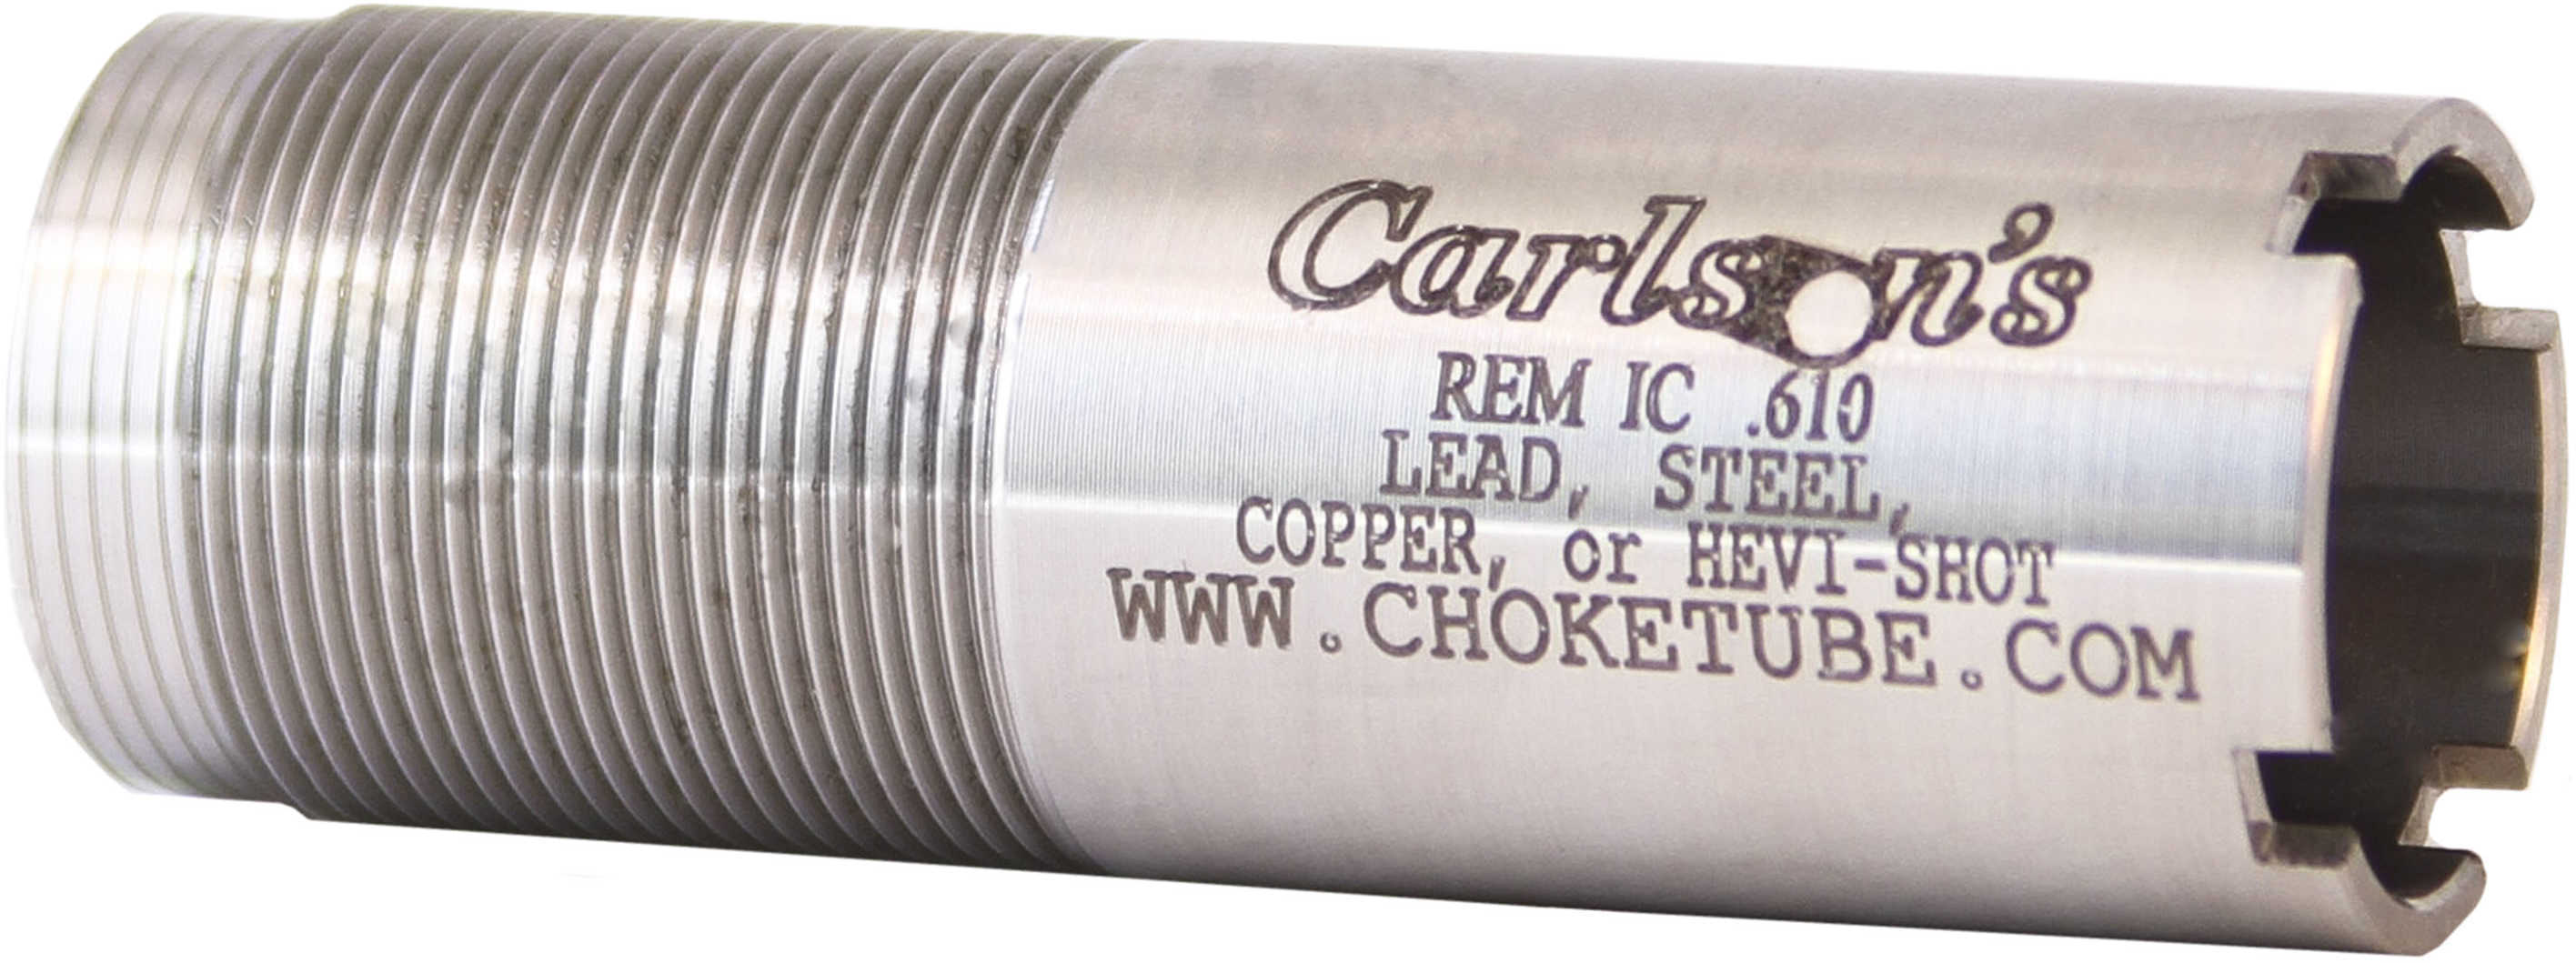 Carlsons Remington Flush Choke Tube 20 Gauge, Improved Cylinder Md: 51202